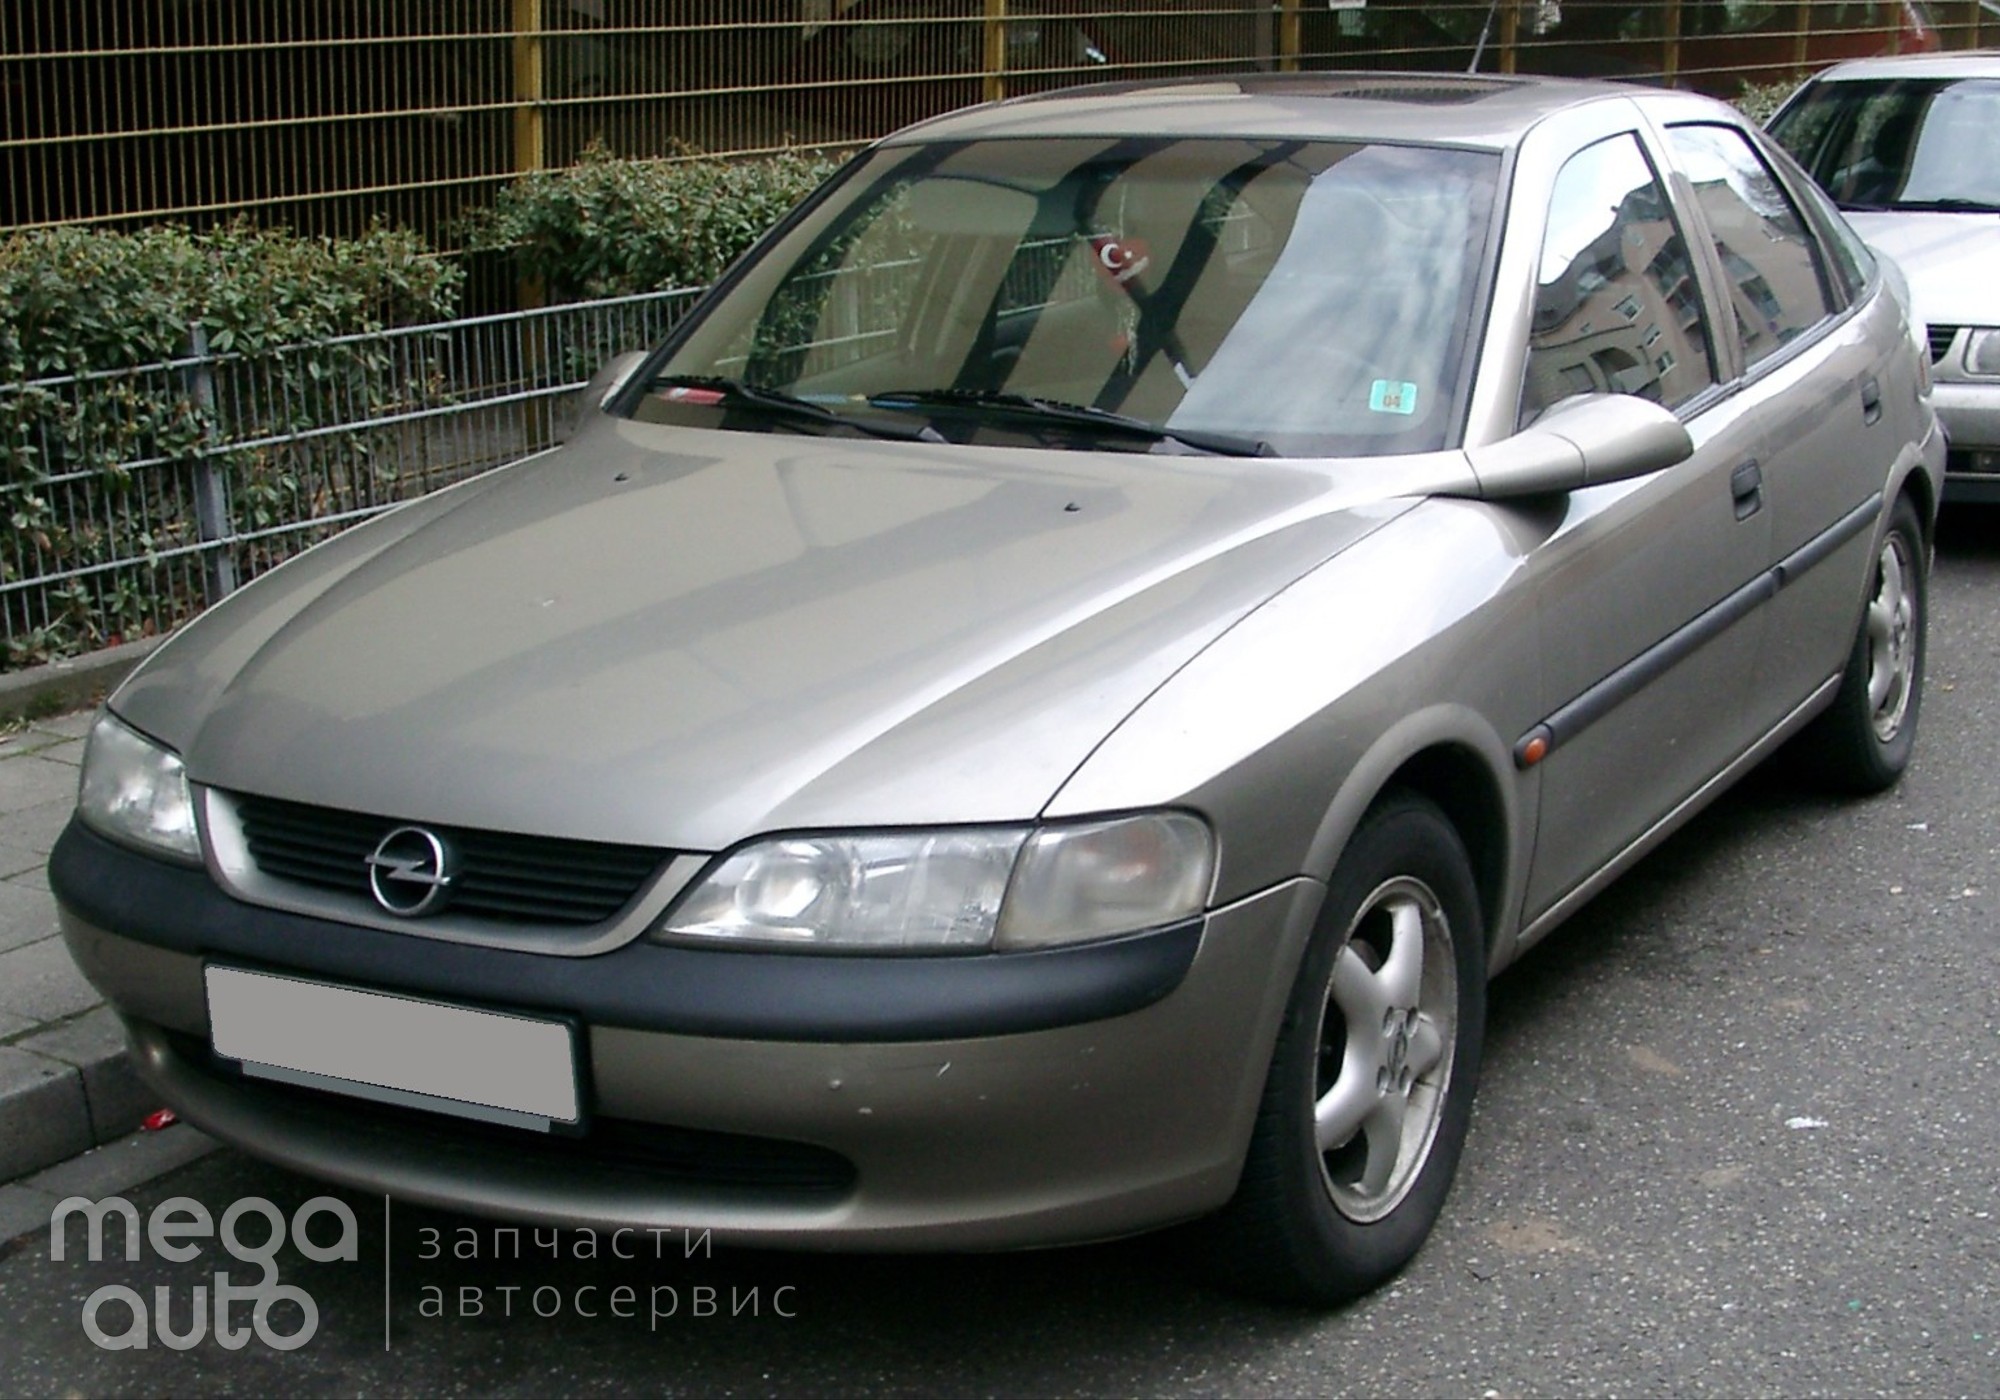 Opel Vectra B 2000 г. в разборе